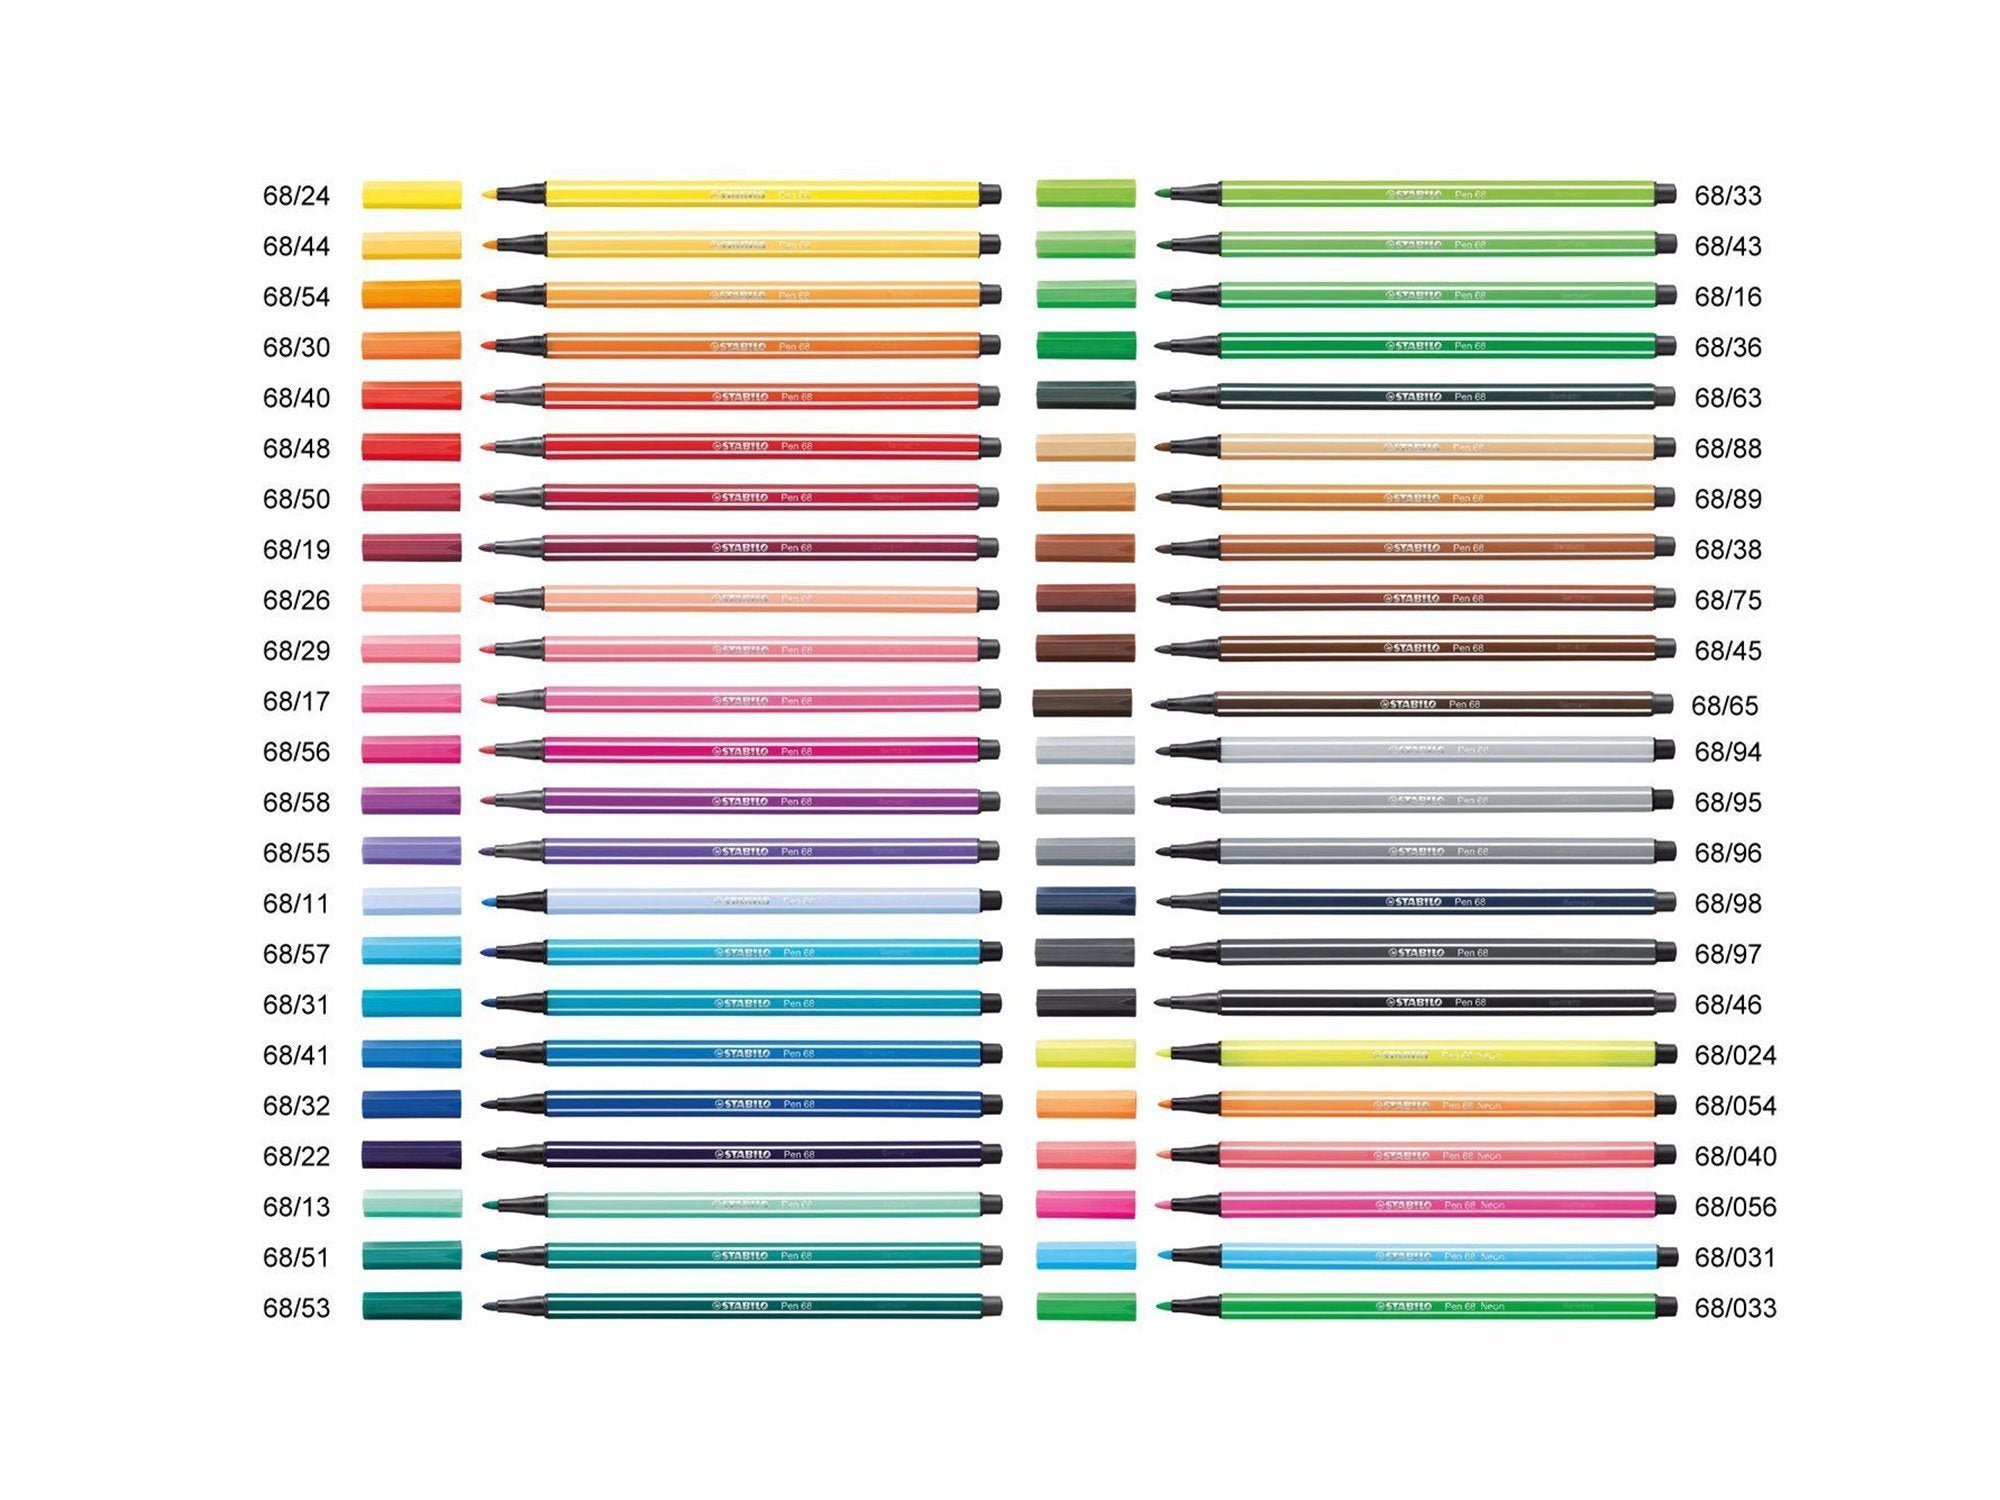 Stabilo Pen 68 and Point 88 Pen Sets at New River Art & Fiber